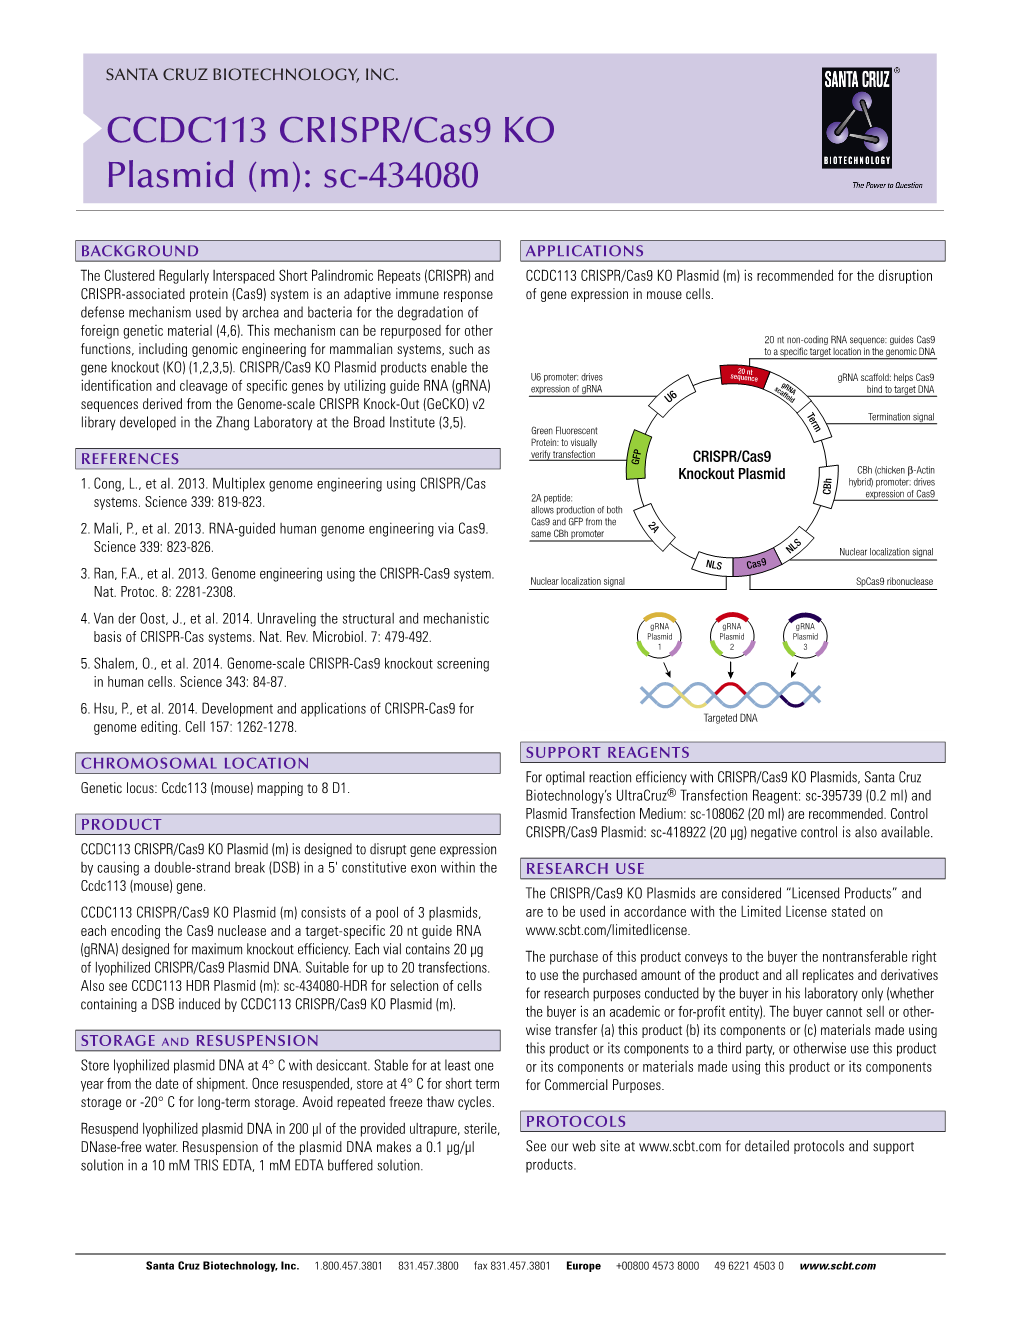 CCDC113 CRISPR/Cas9 KO Plasmid (M): Sc-434080